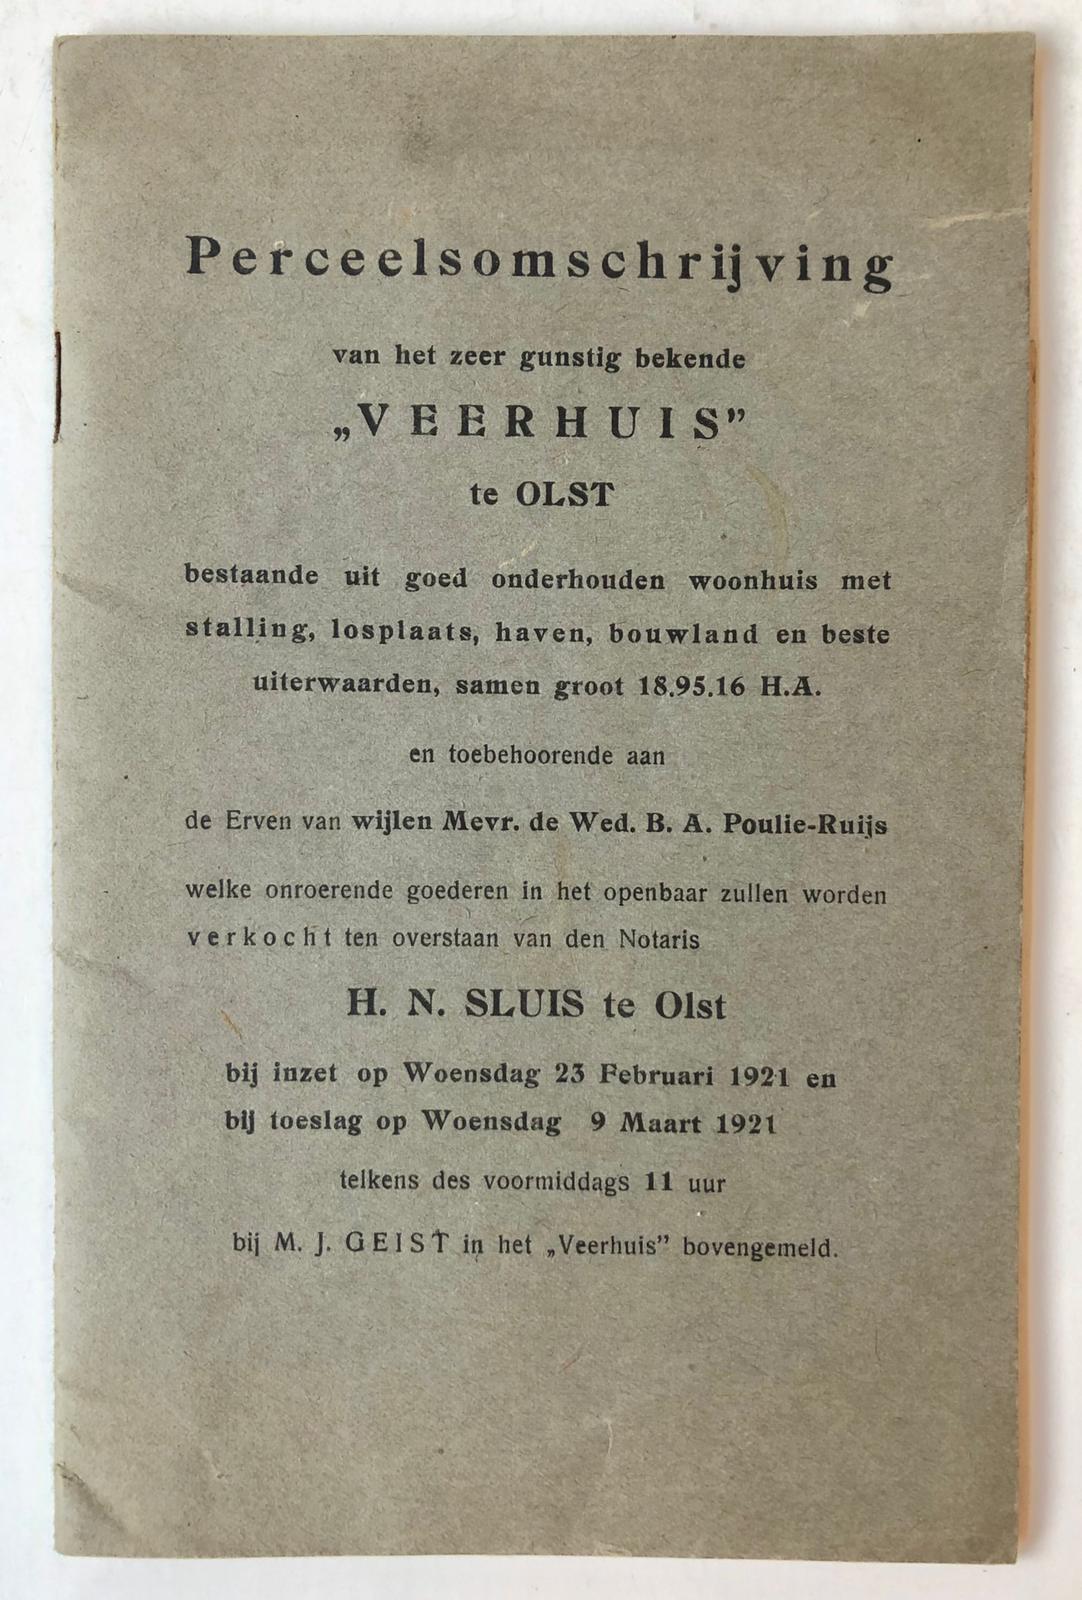 [VEILINGBOEKJE ONROEREND GOED] - [Veilingboekje betreffende onroerend goed Olst, Overijssel met grote kaart] Perceelsomschrijving van het Veerhuis te Olst, Notaris H. N. Sluit te Olst, 1921, 20 pp.